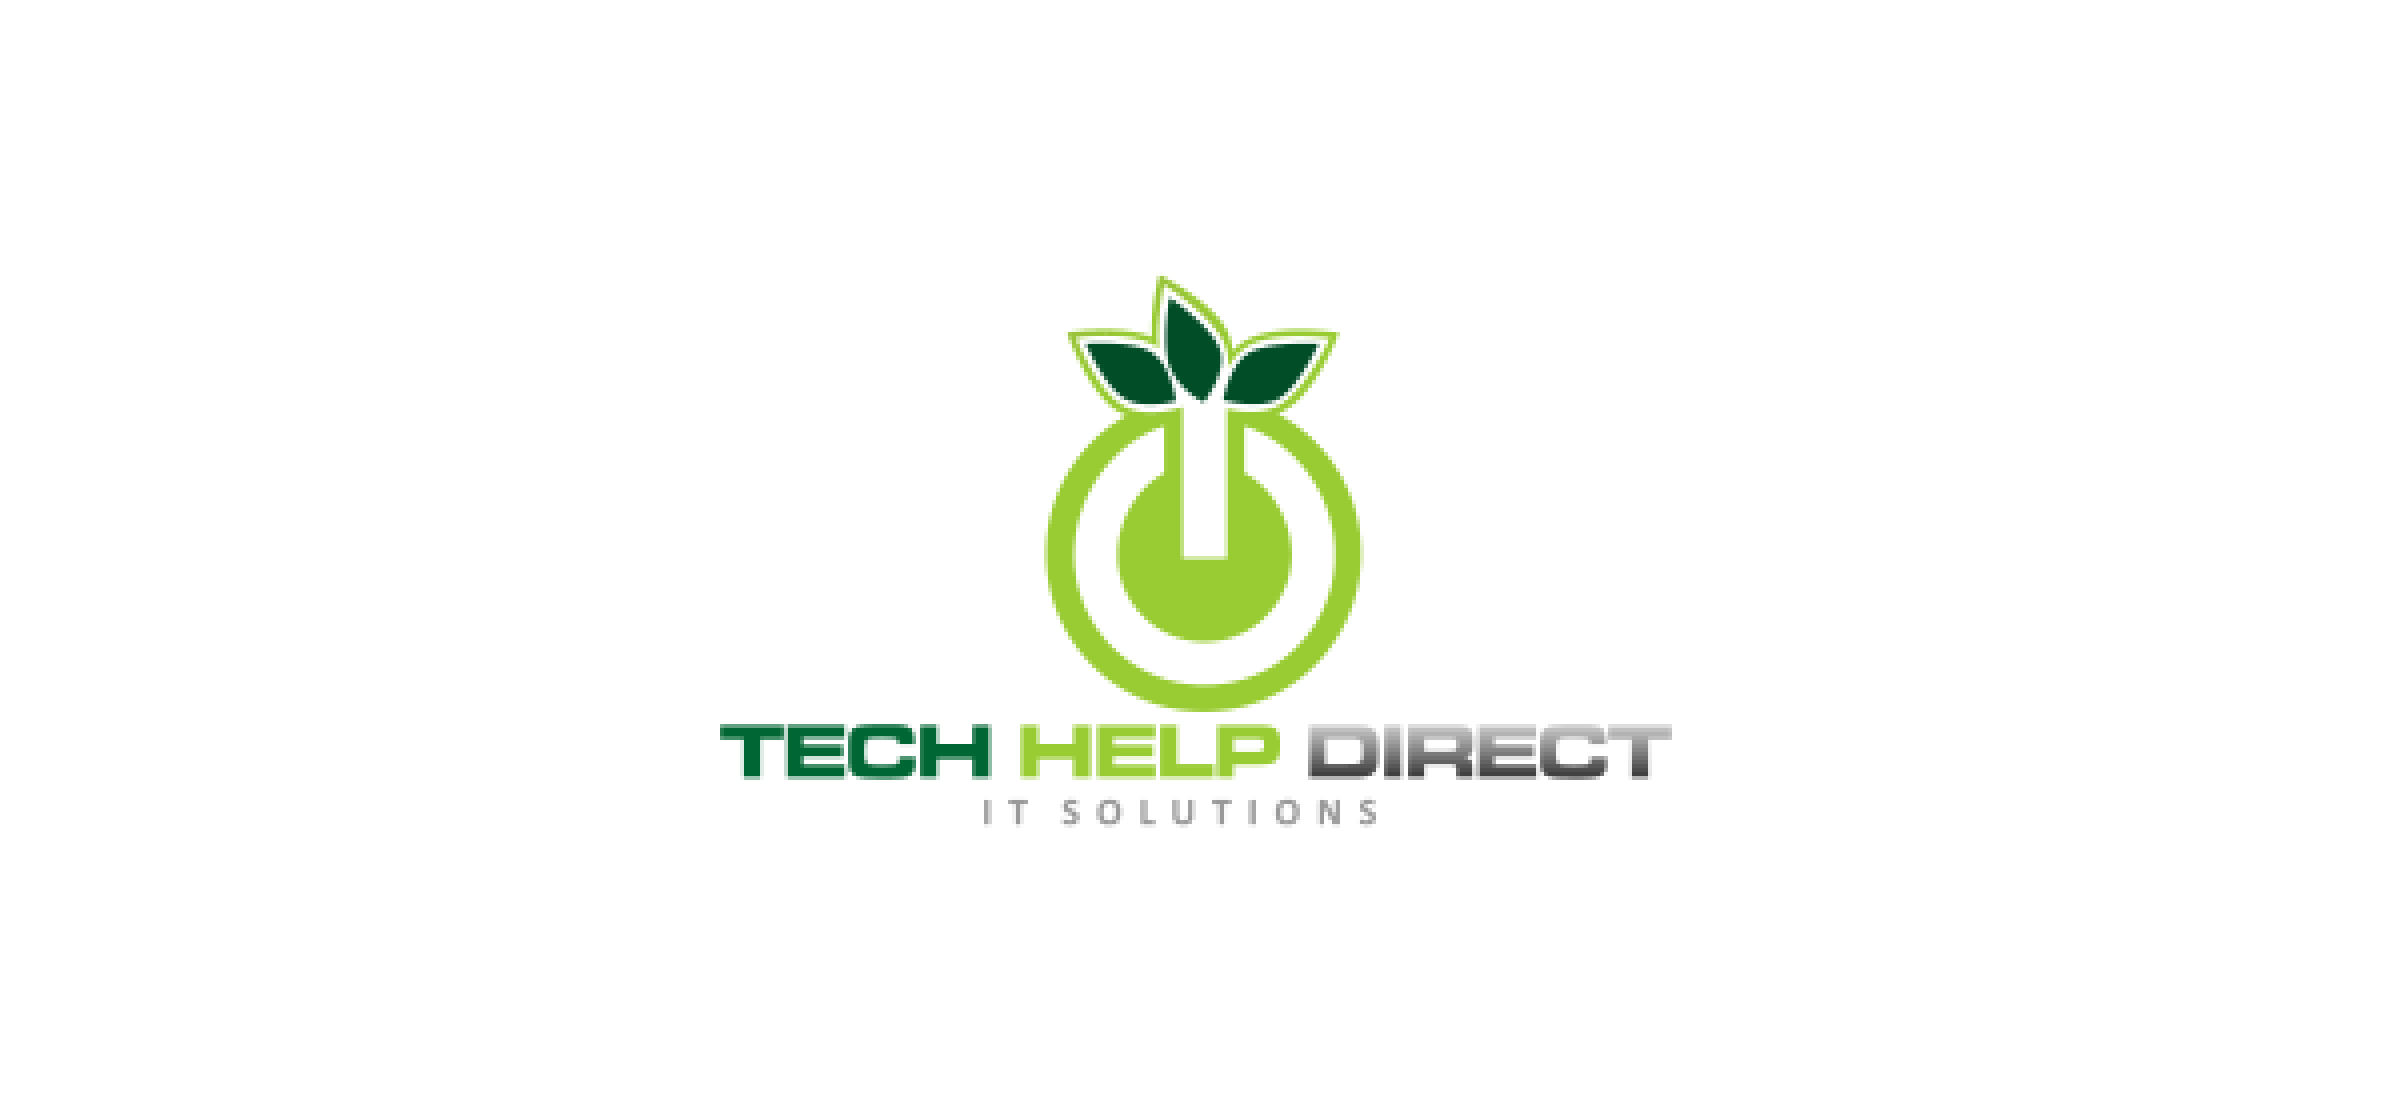 The Tech Help Direct logo